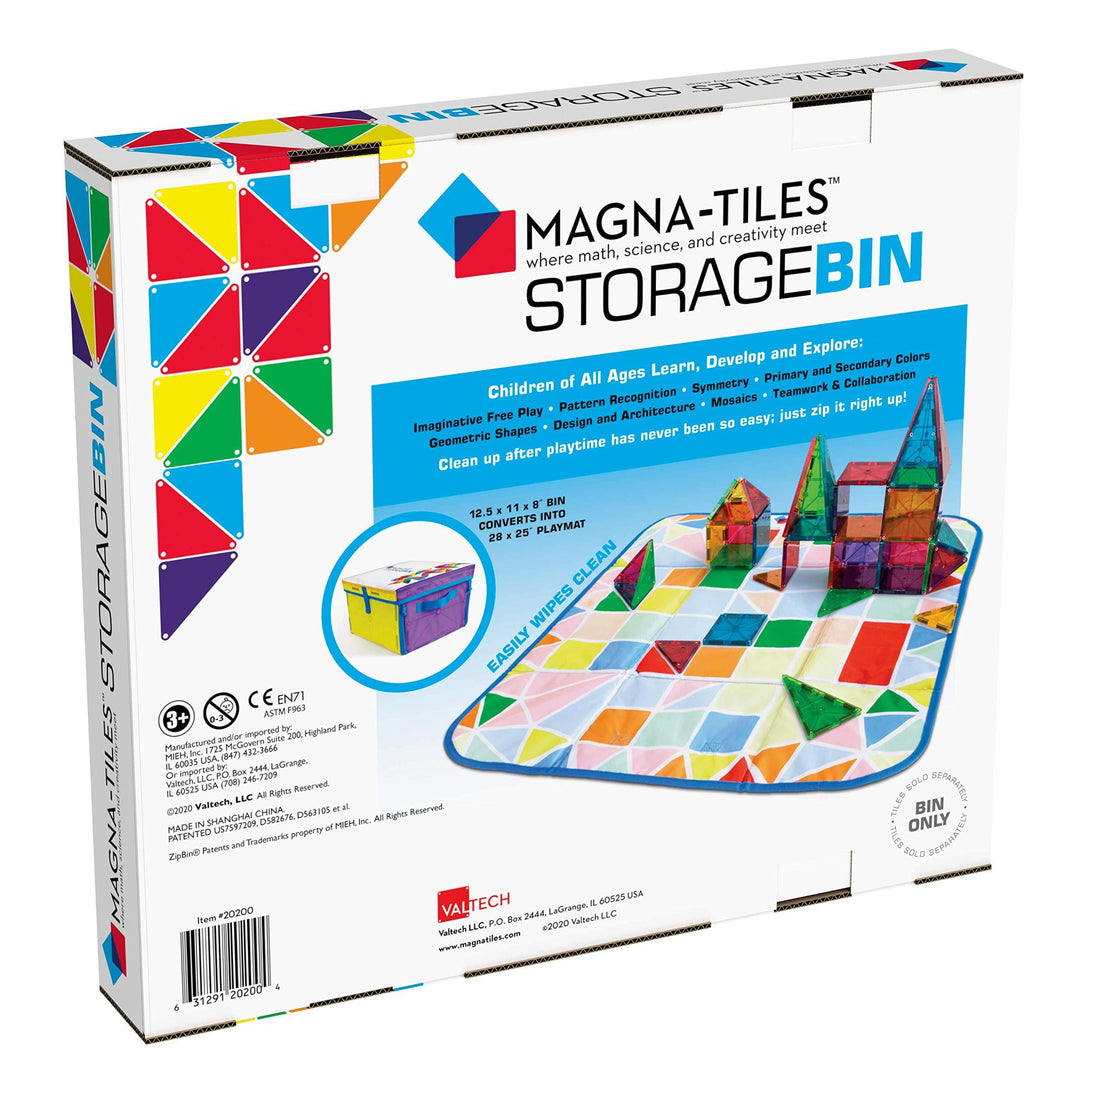 Magna-Tiles Storage Bin & Interactive Play-Mat - Kitty Hawk Kites Online Store